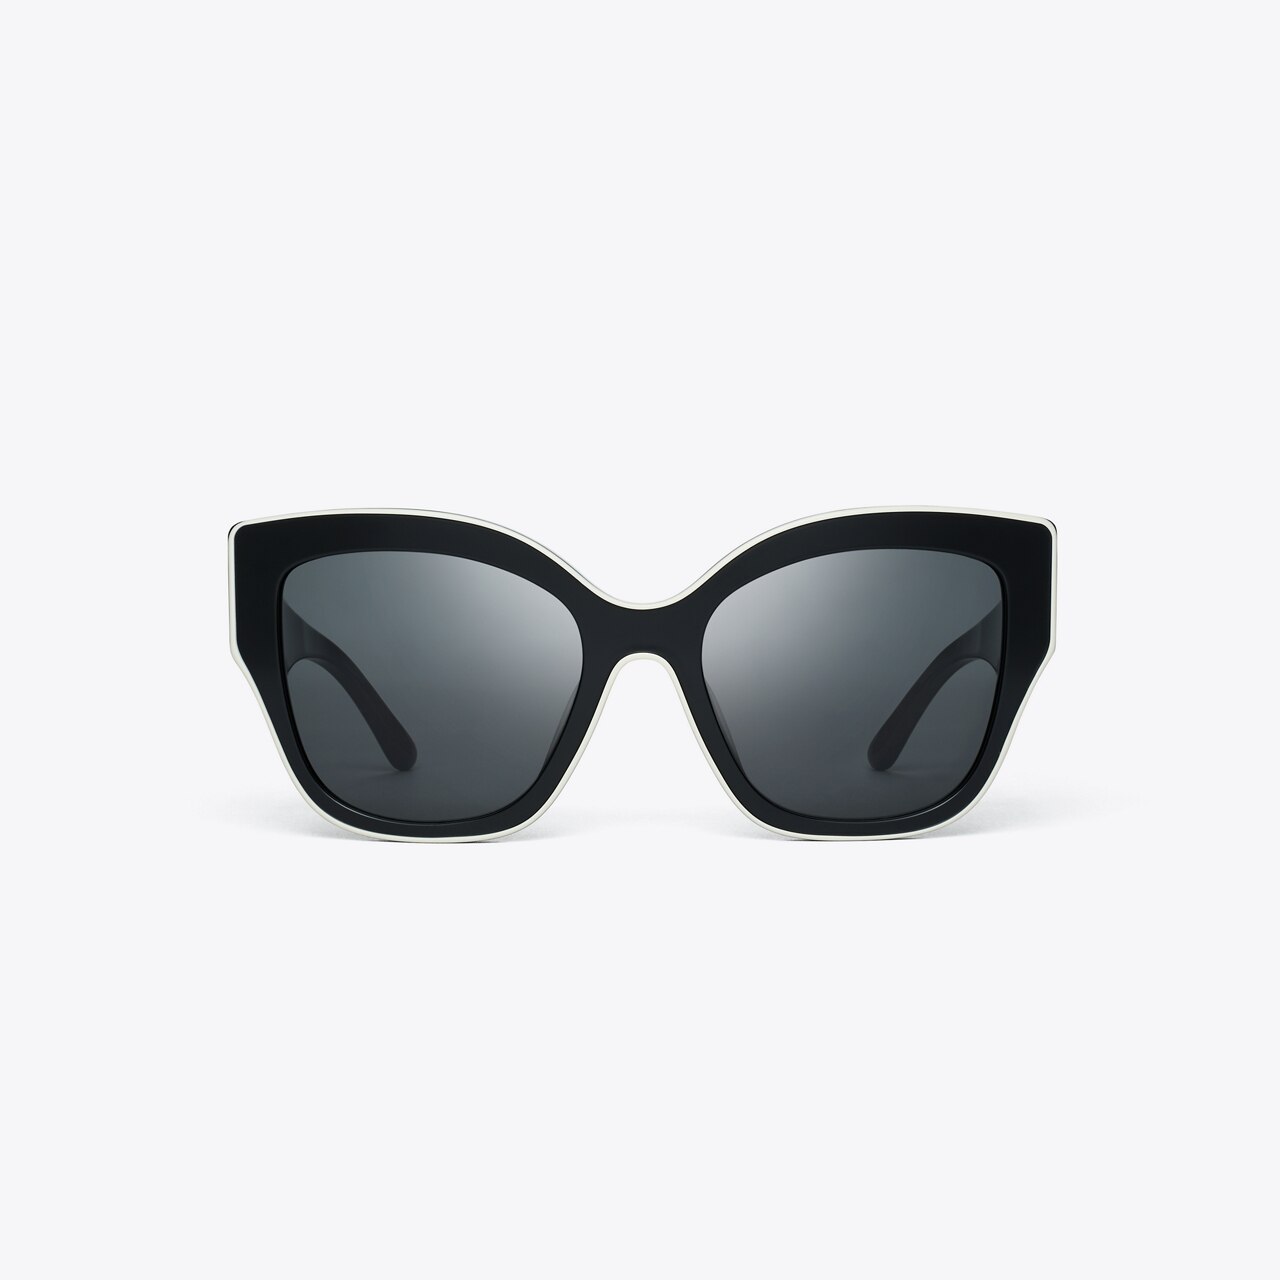 Louis Vuitton - My Monogram Light Cat Eye Glasses - Dark Tortoise - Women - Sunglasses - Luxury